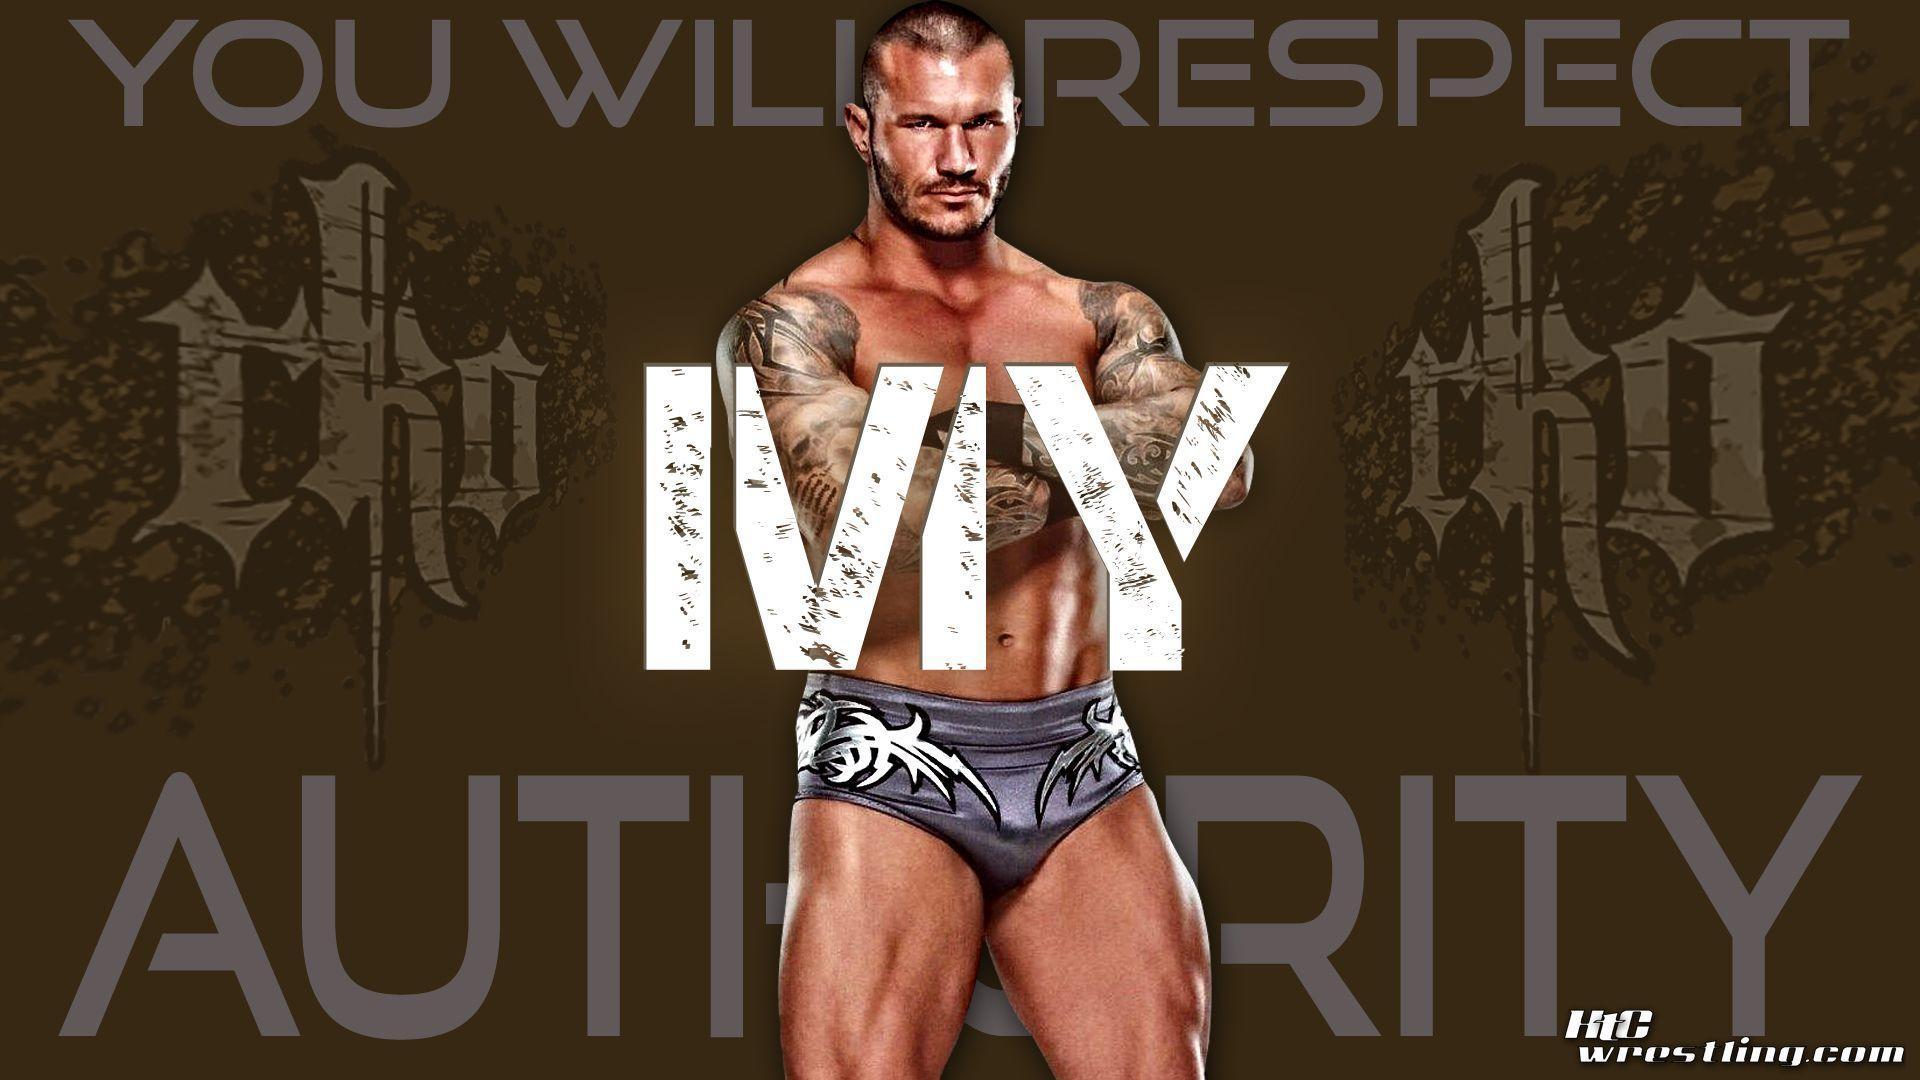 Wallpaper Of The Week: Randy Orton “Respect” Wallpaper. Keep Calm